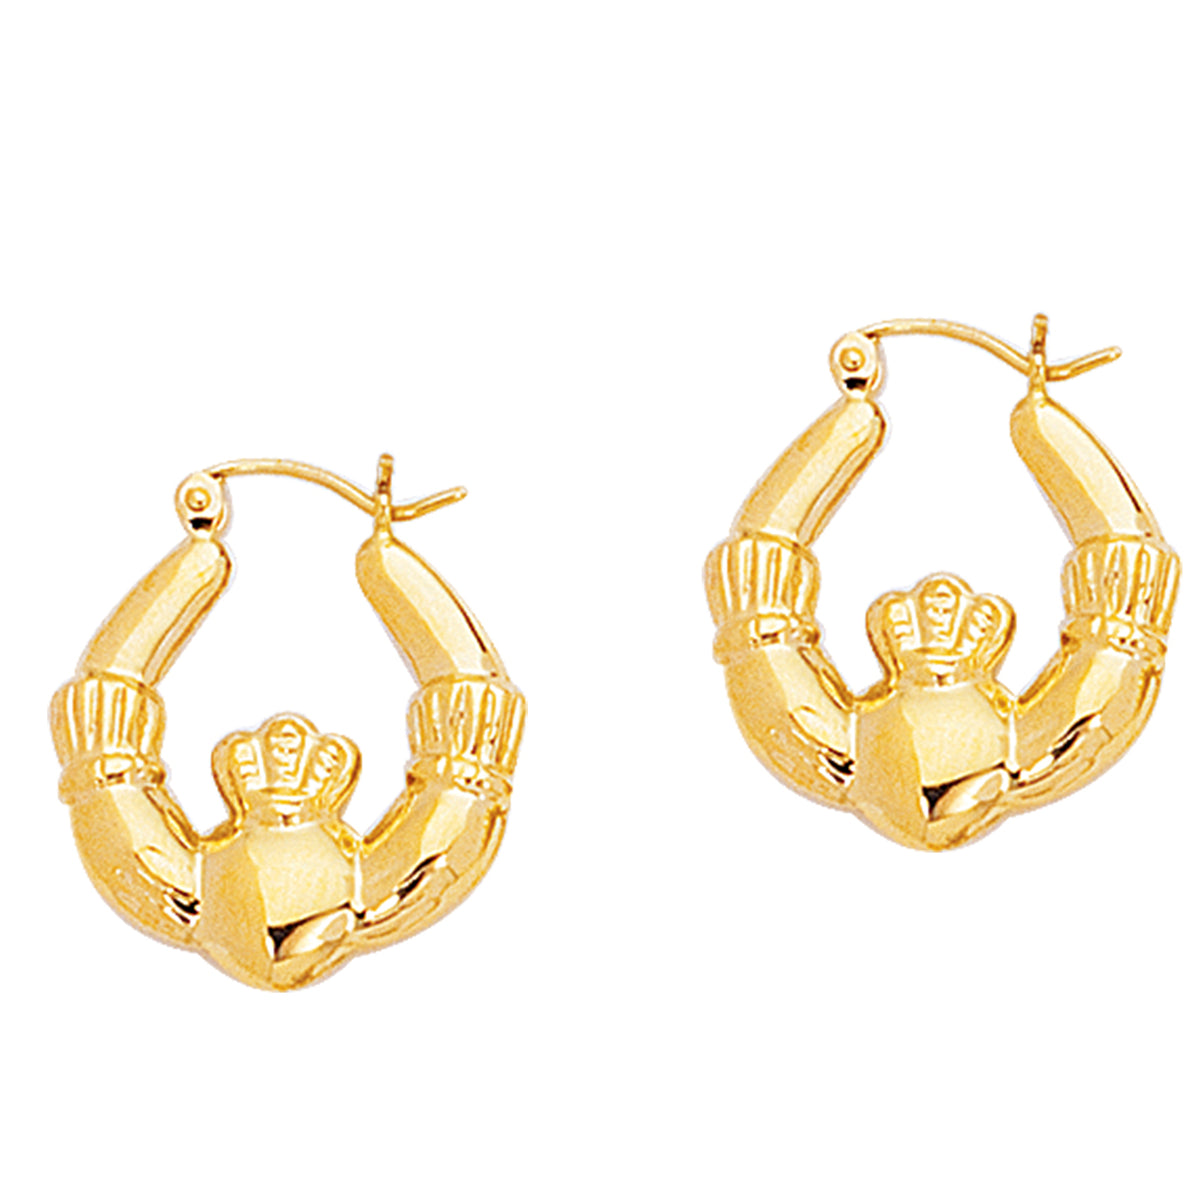 14k Gold Shiny Claddagh Design Hoop Earrings, Diameter 20mm